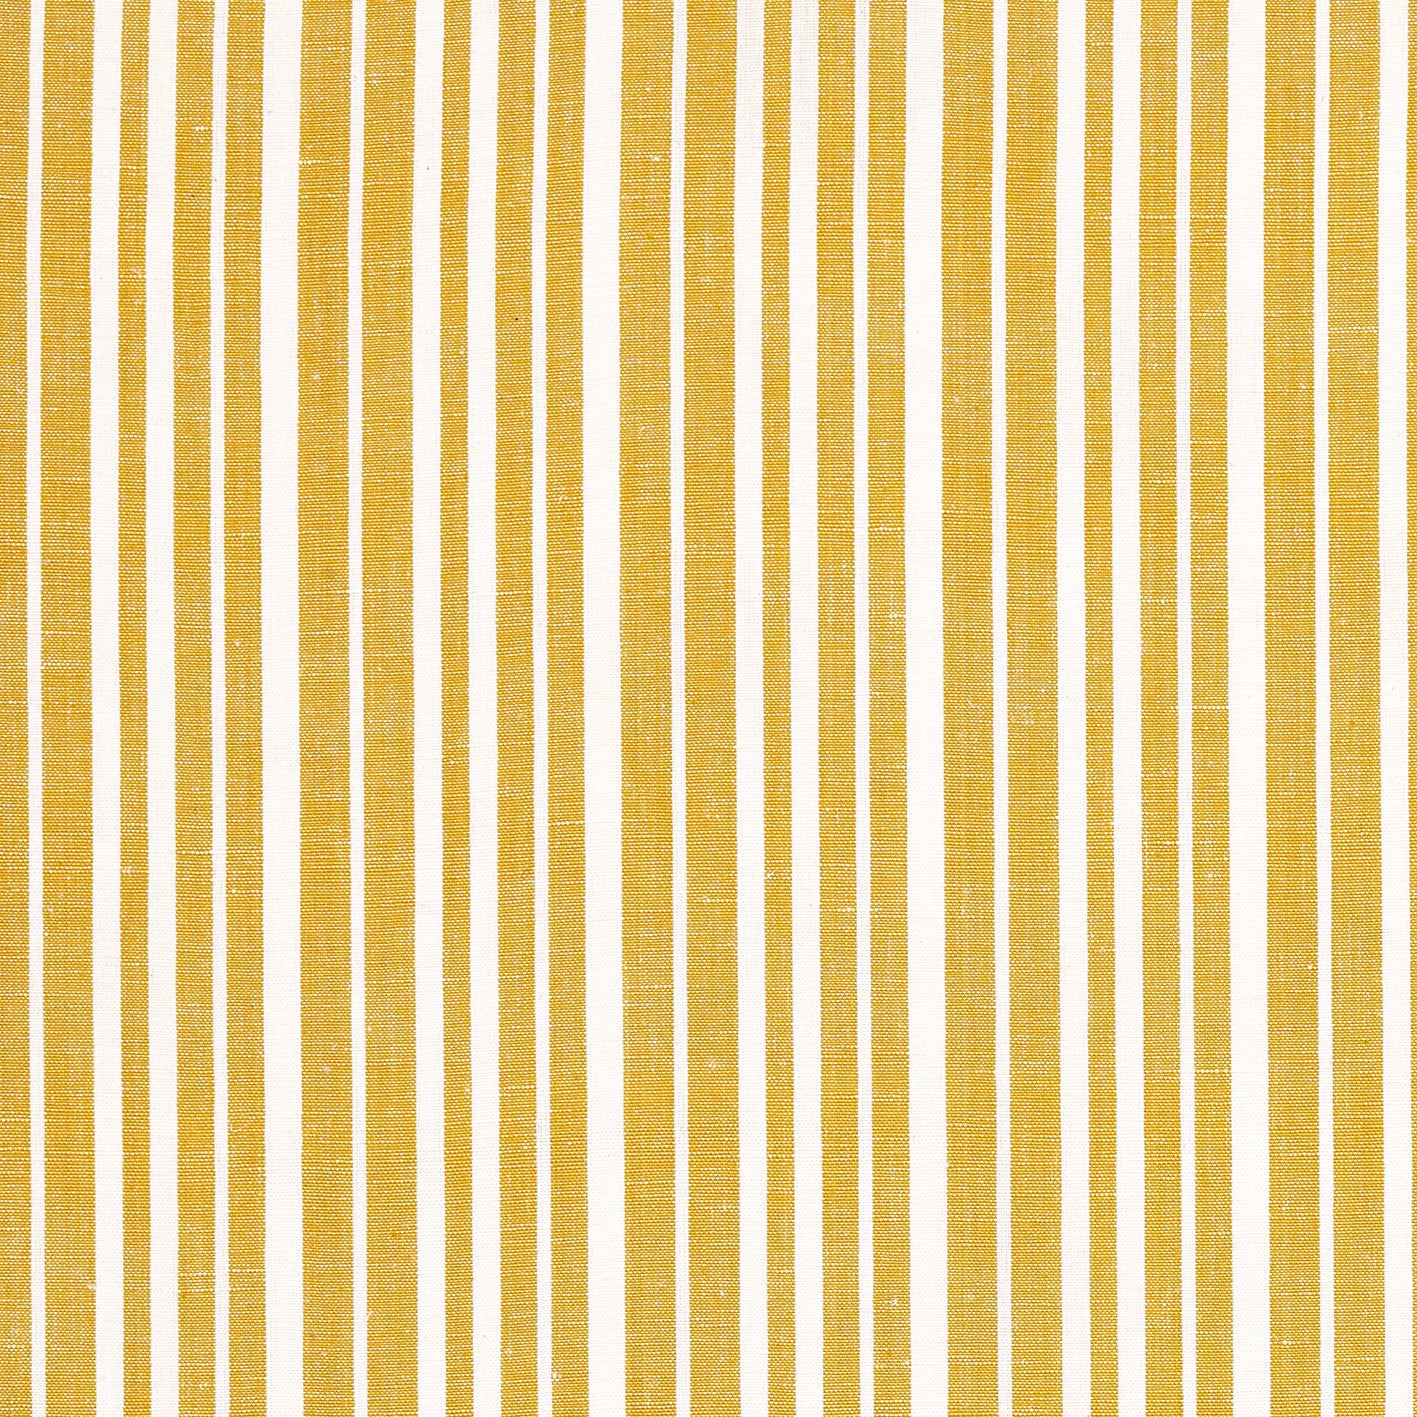 Palermo Ticking Stripe Cotton Linen Home Decor Fabric in Yellow 